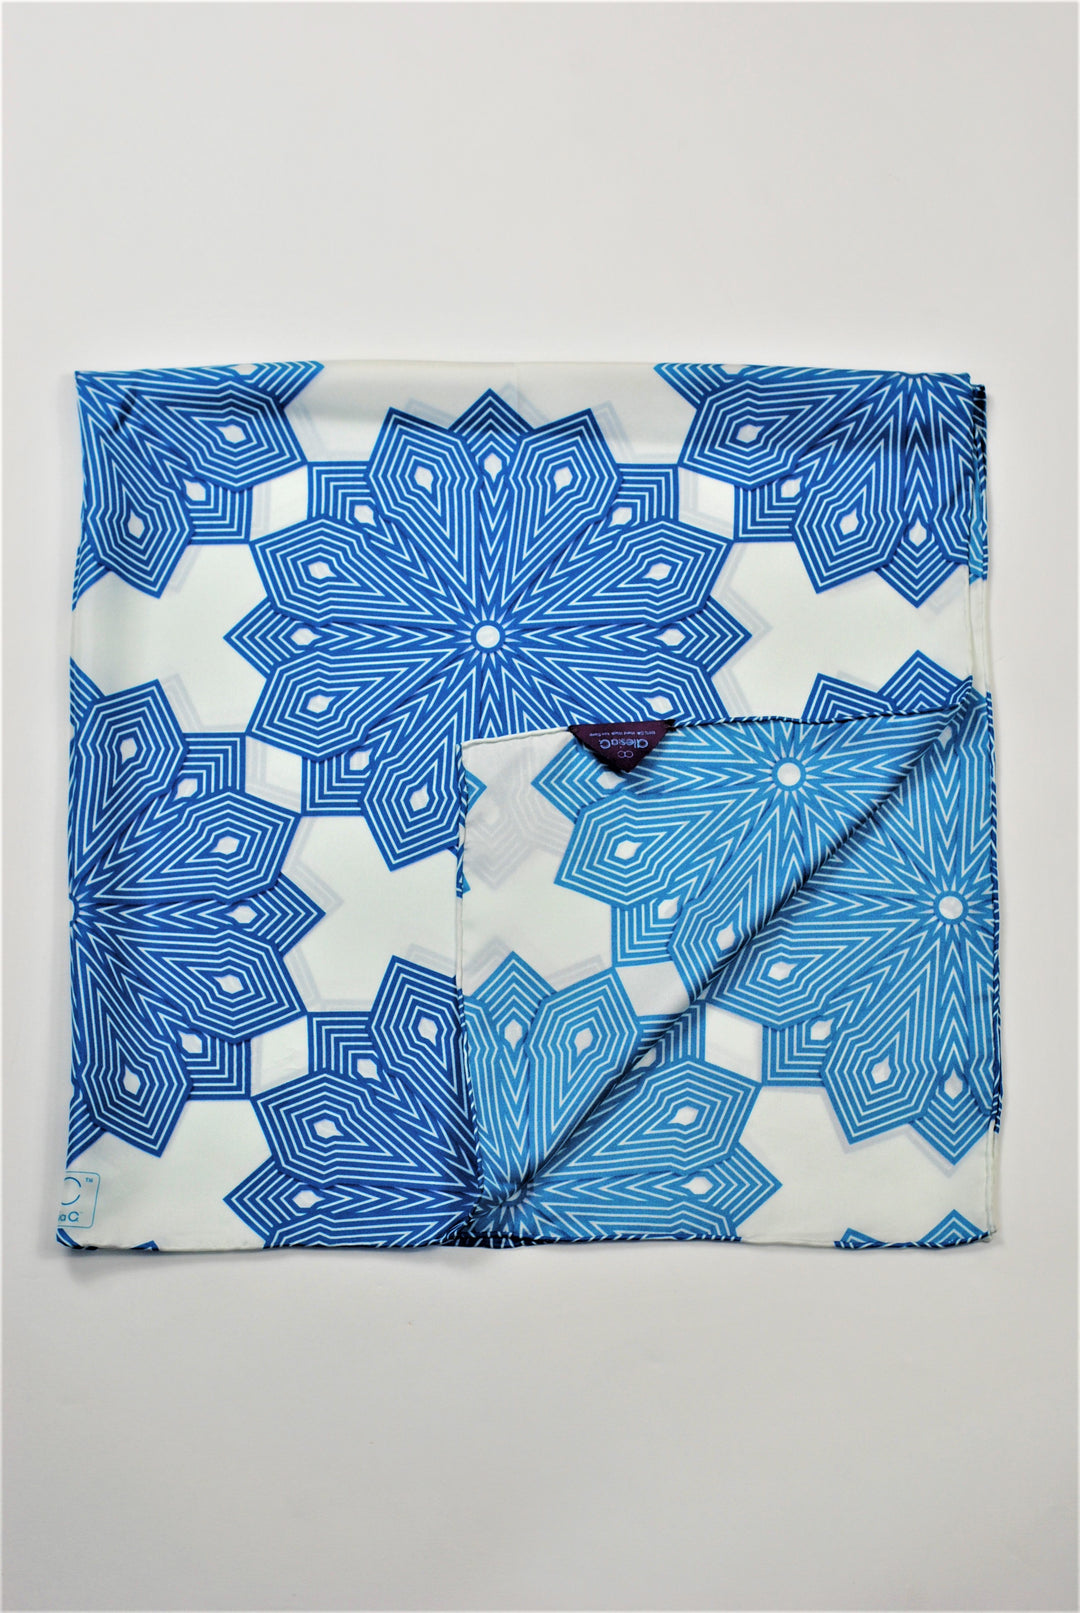 SNOWFLAKES Mandala 100% Silk Square Scarf in Blue White